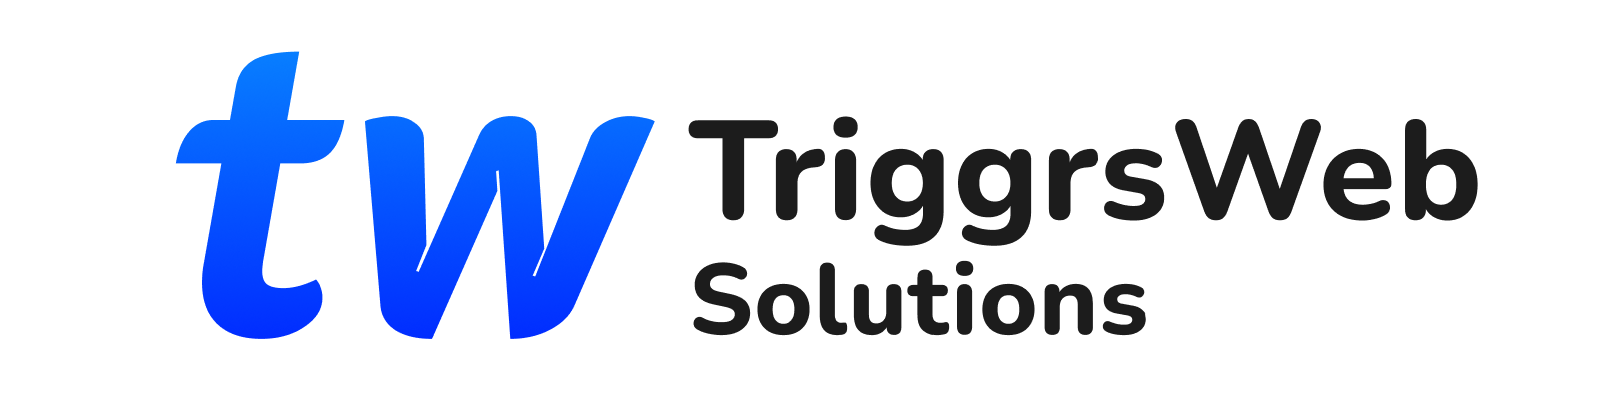 Triggrs Web Solutions Logo